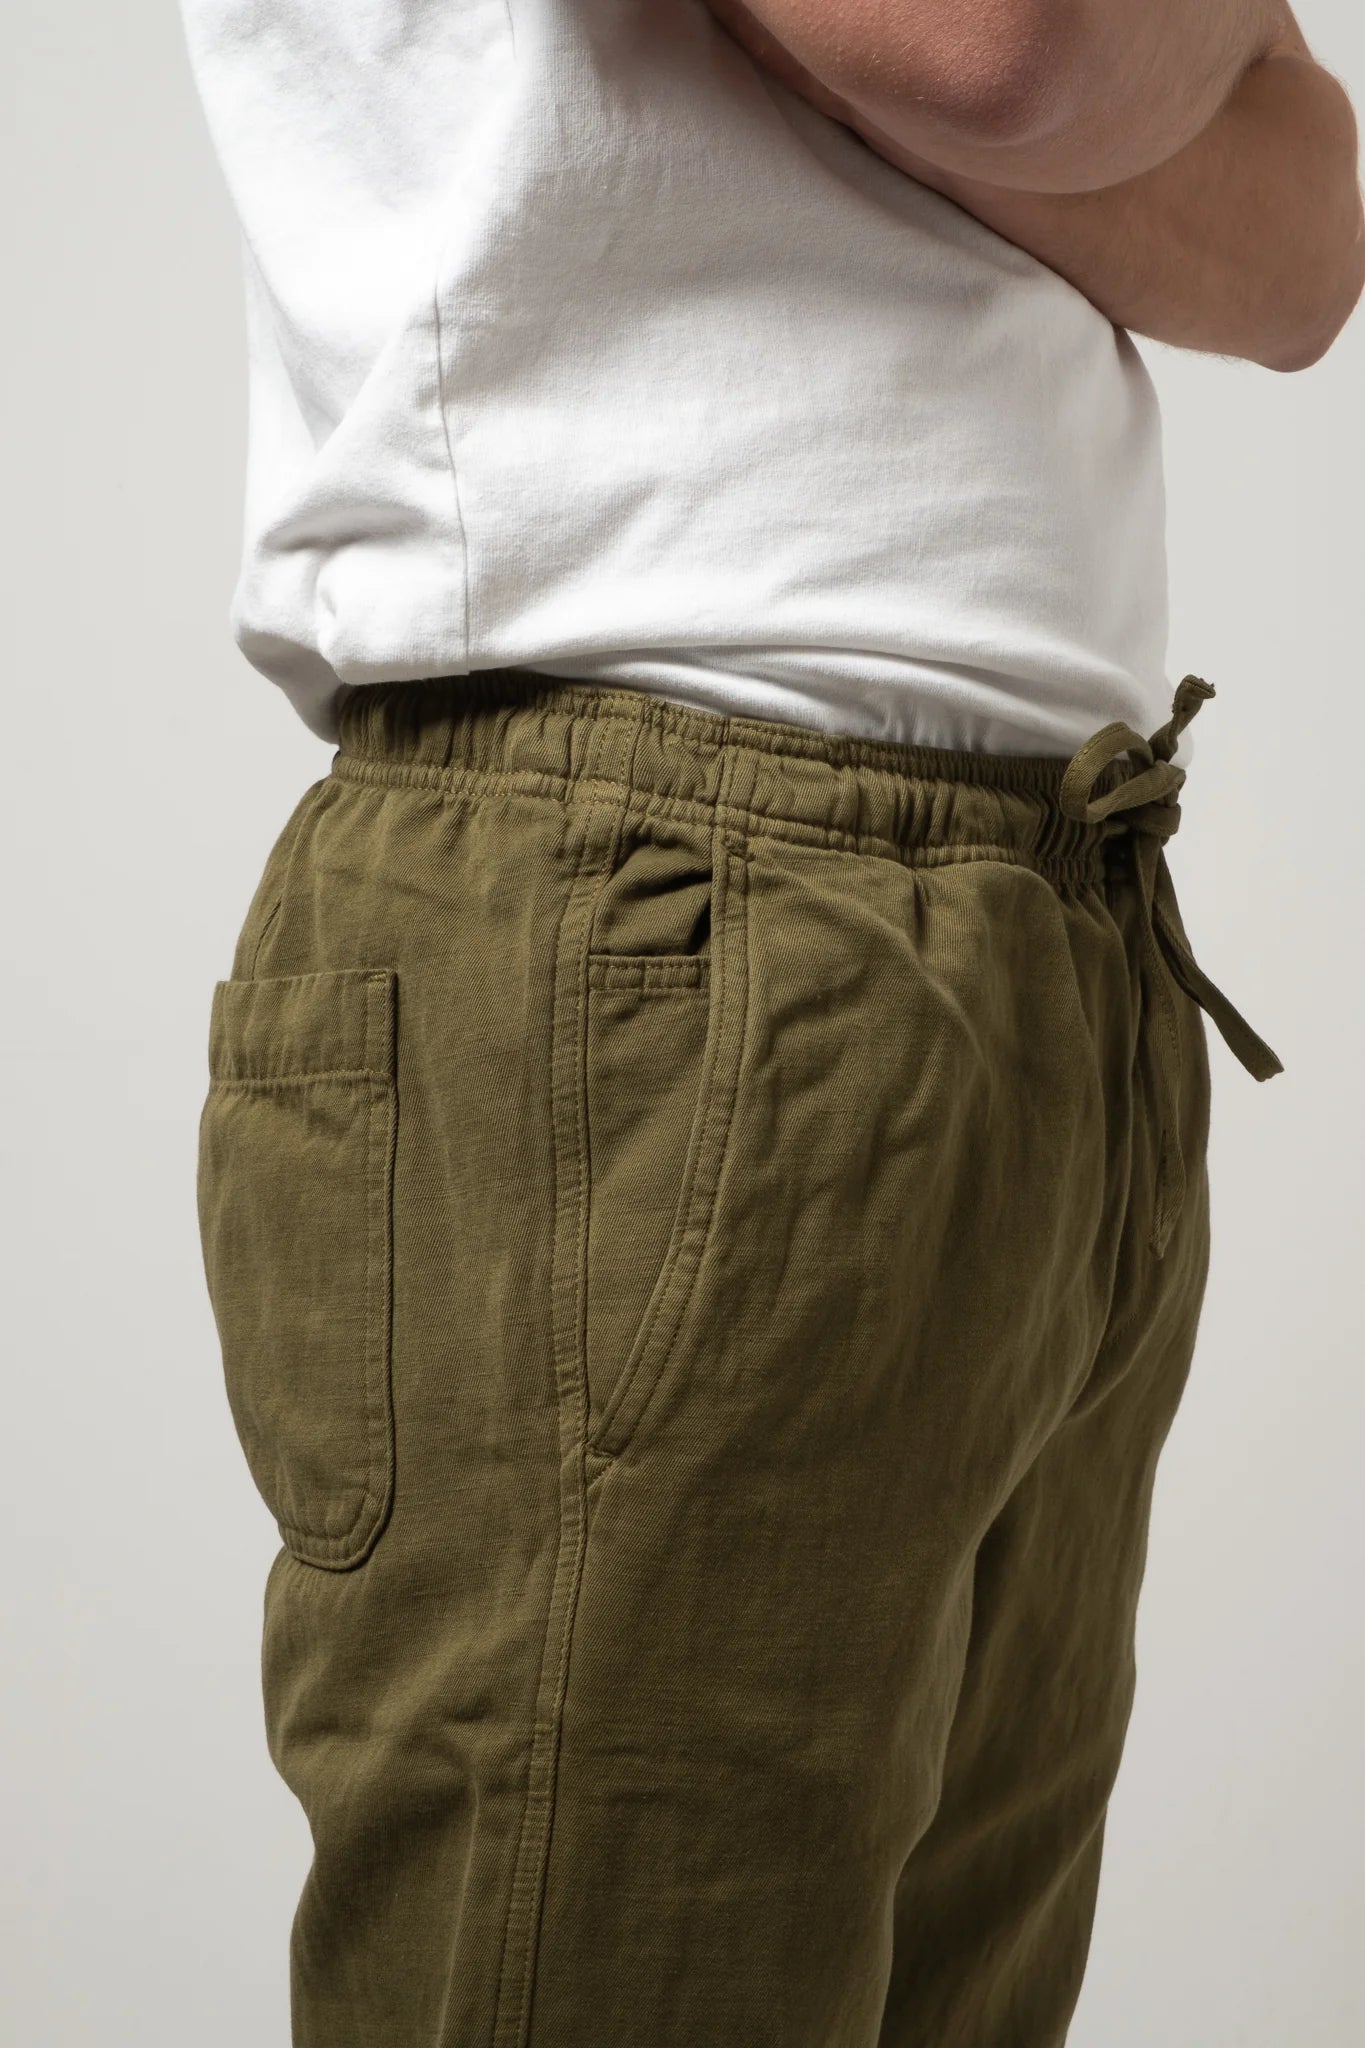 C.O.F. Studio Drawstring Pants Light Cotton Linen in olive